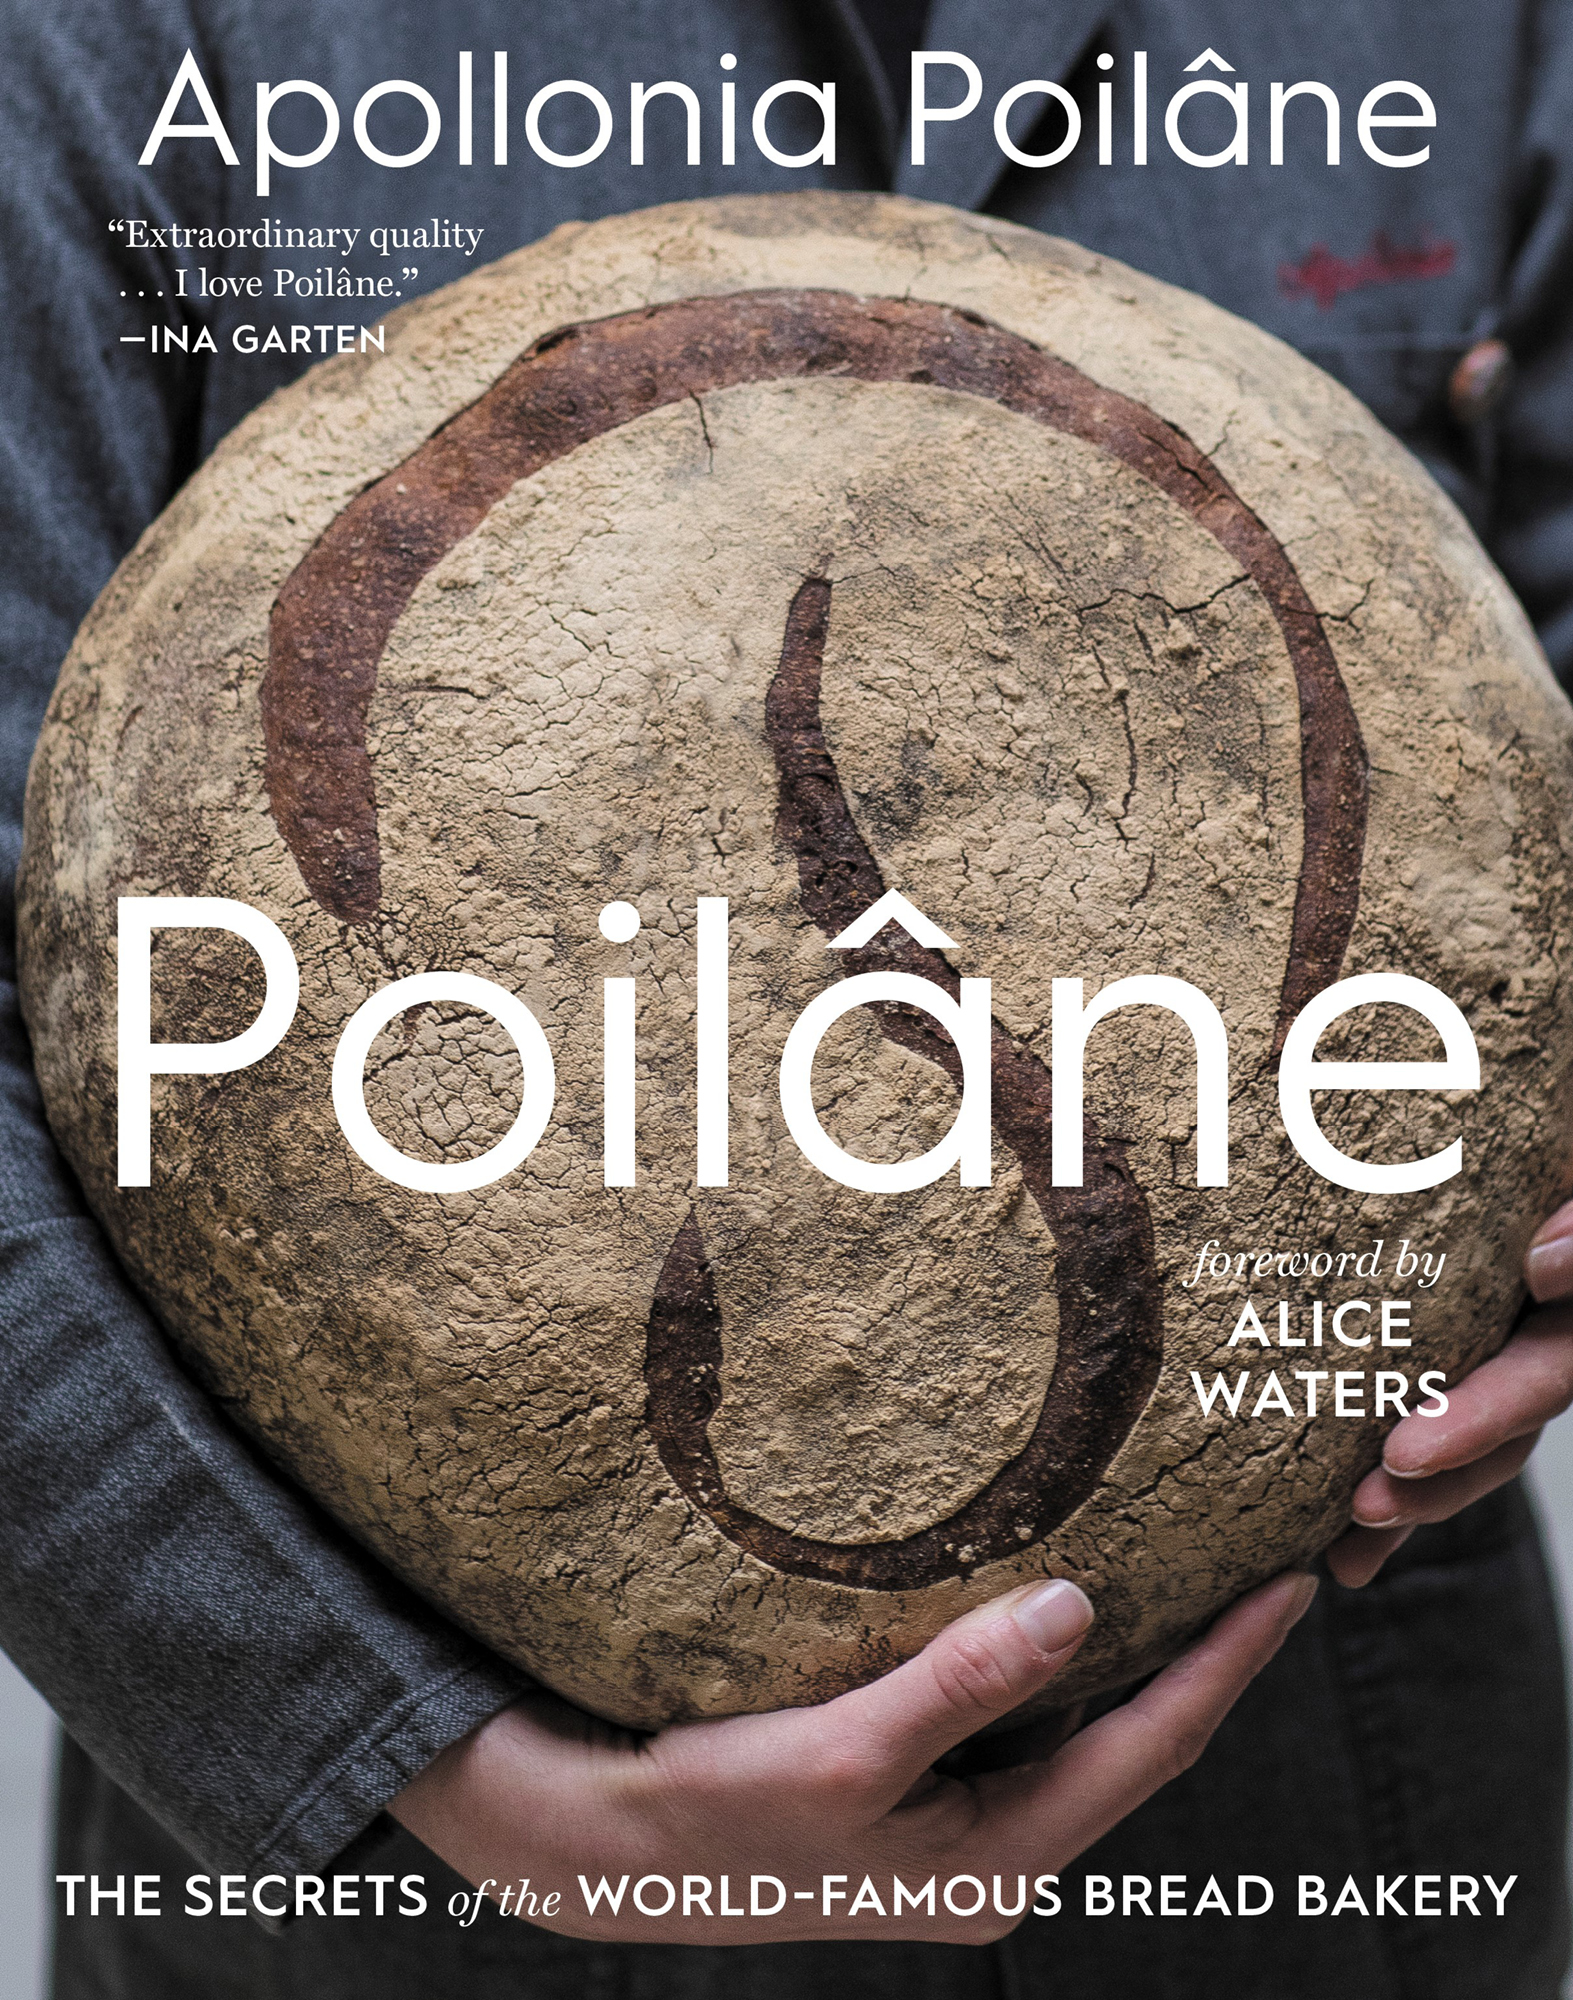 Apollonia Poilâne's very first cookbook - Poilâne: The Secrets of the World-Famous Bread Bakery